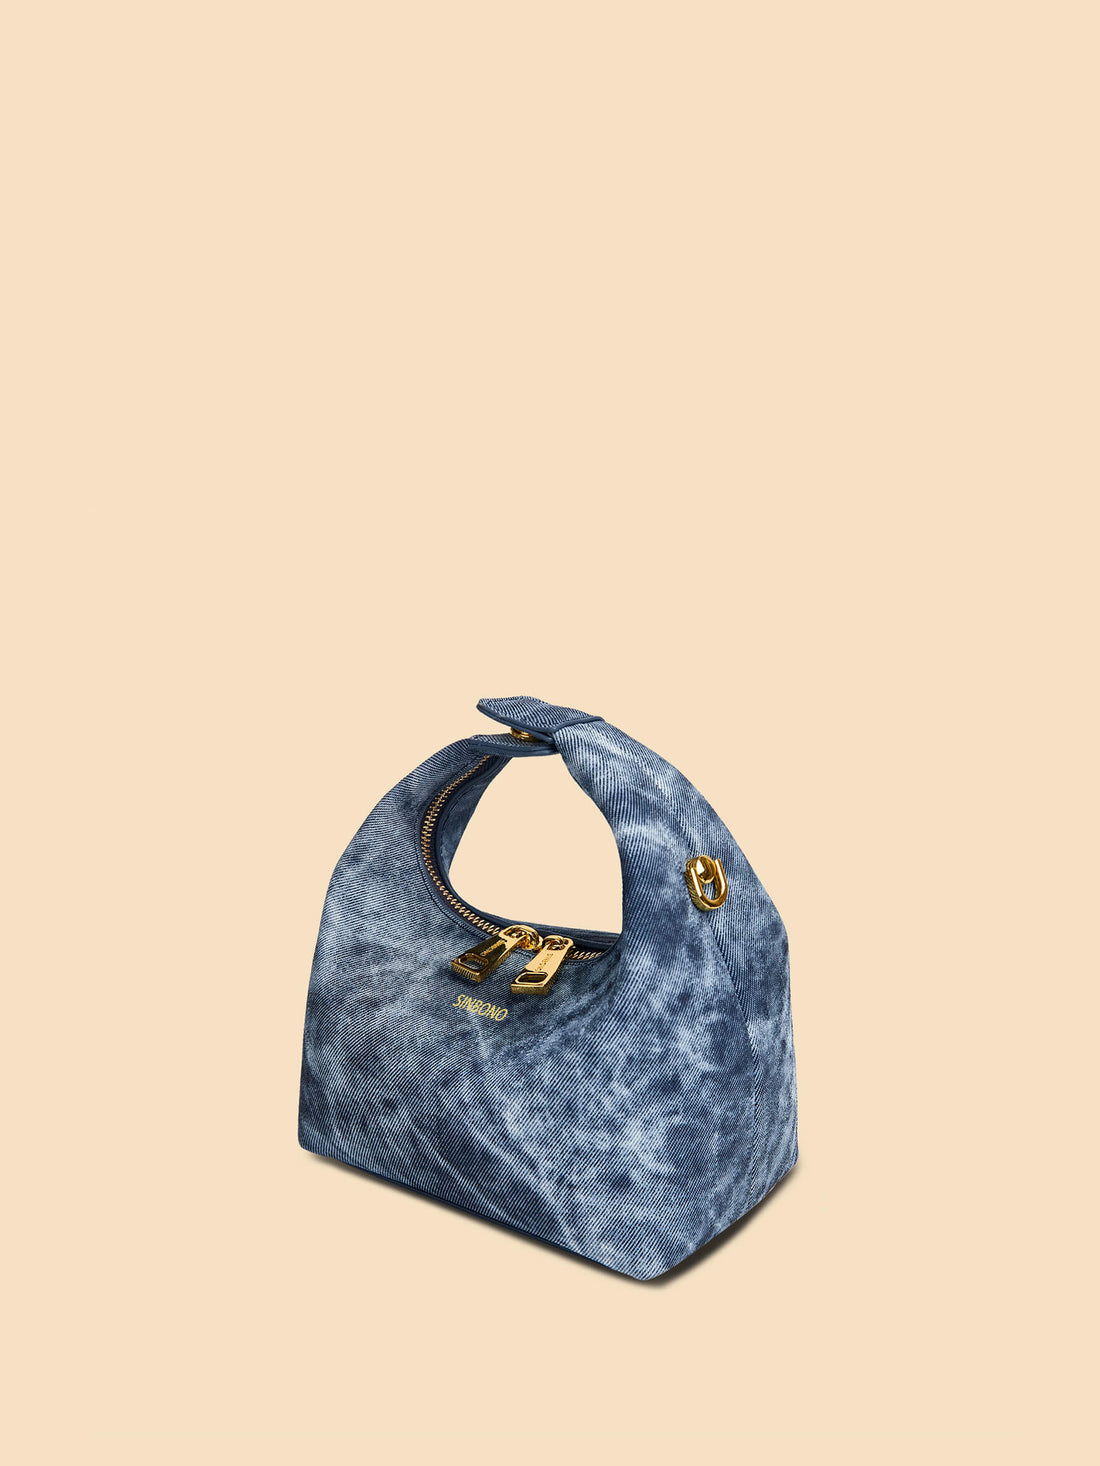 SINBONO Vienna Deep Blue Leather Handbags -Vegan Leather Women Bag